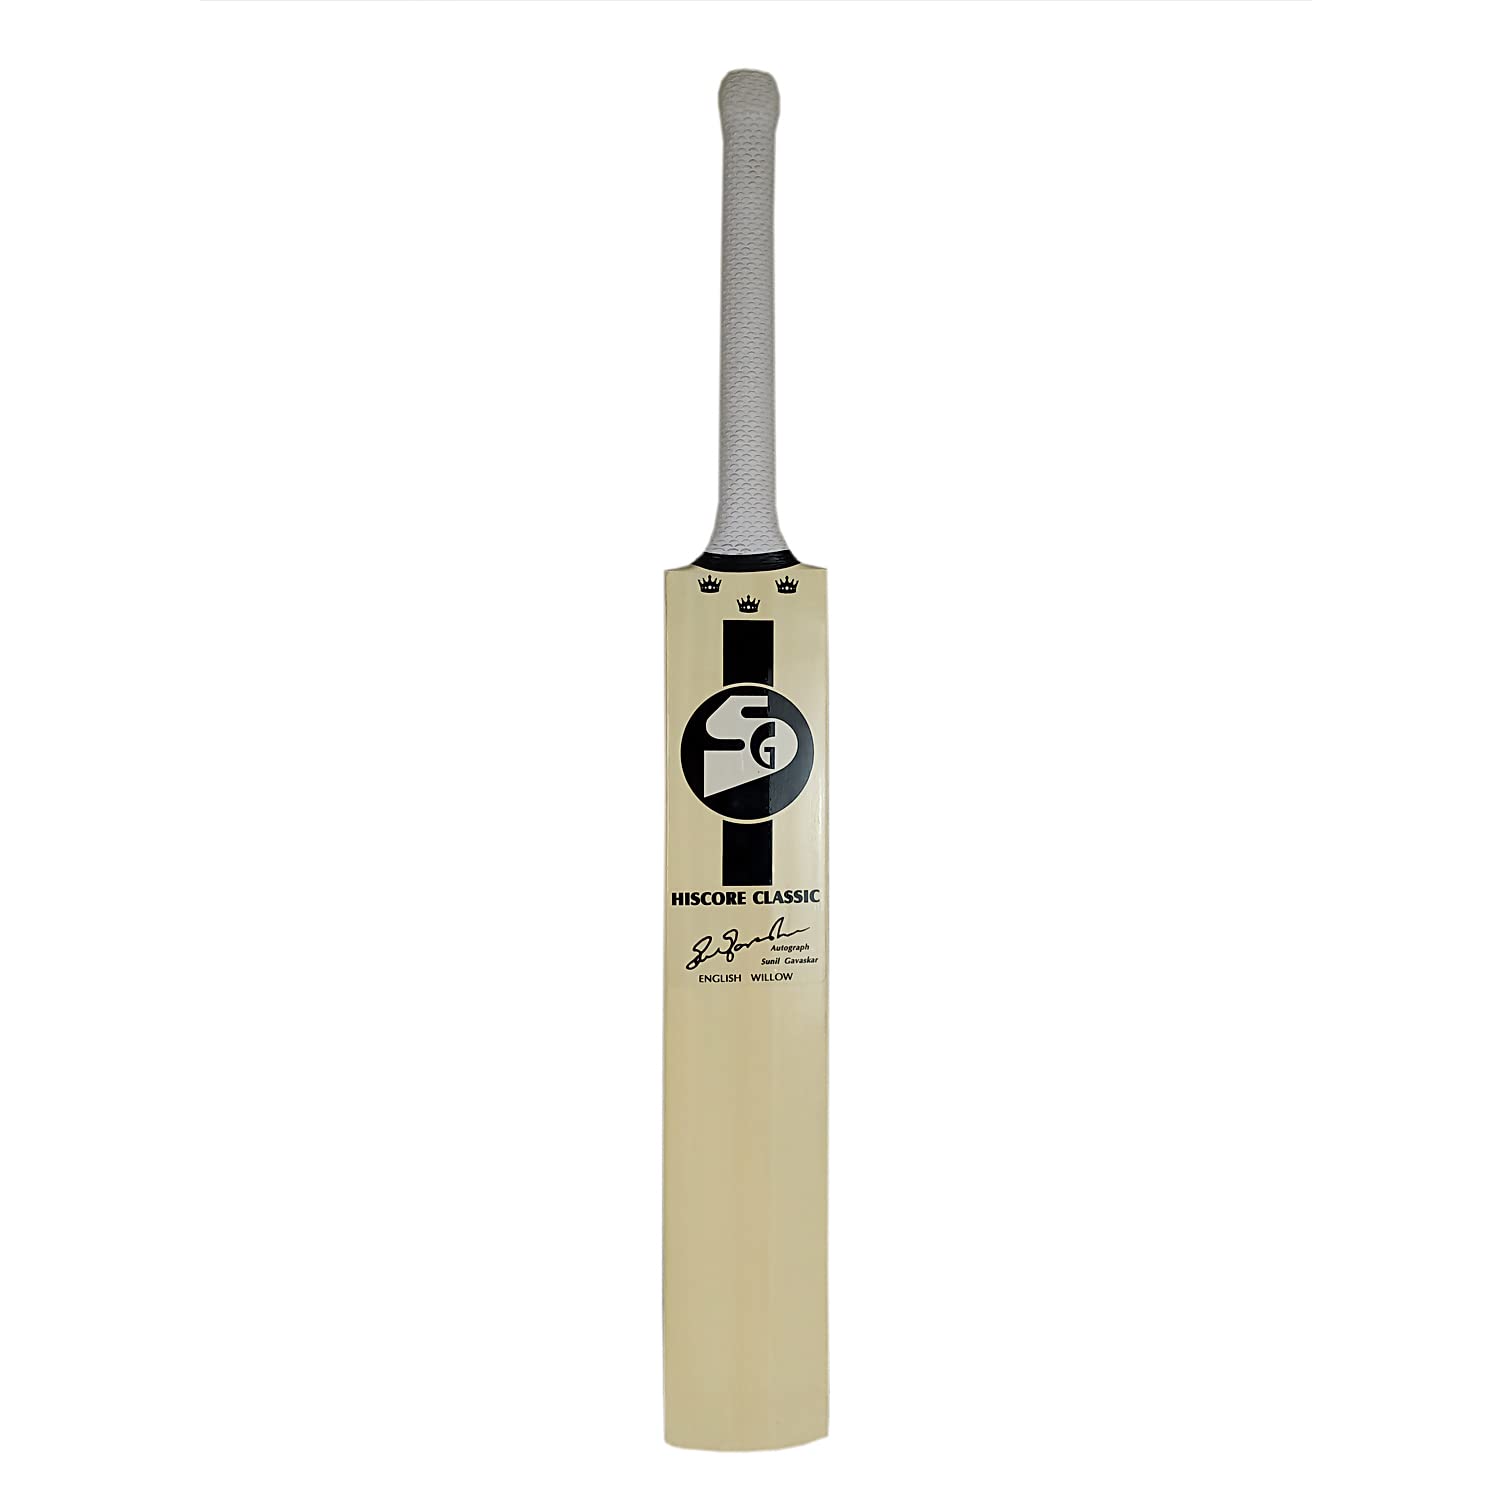 SG Hiscore Classic English Willow Cricket Bat - Best Price online Prokicksports.com